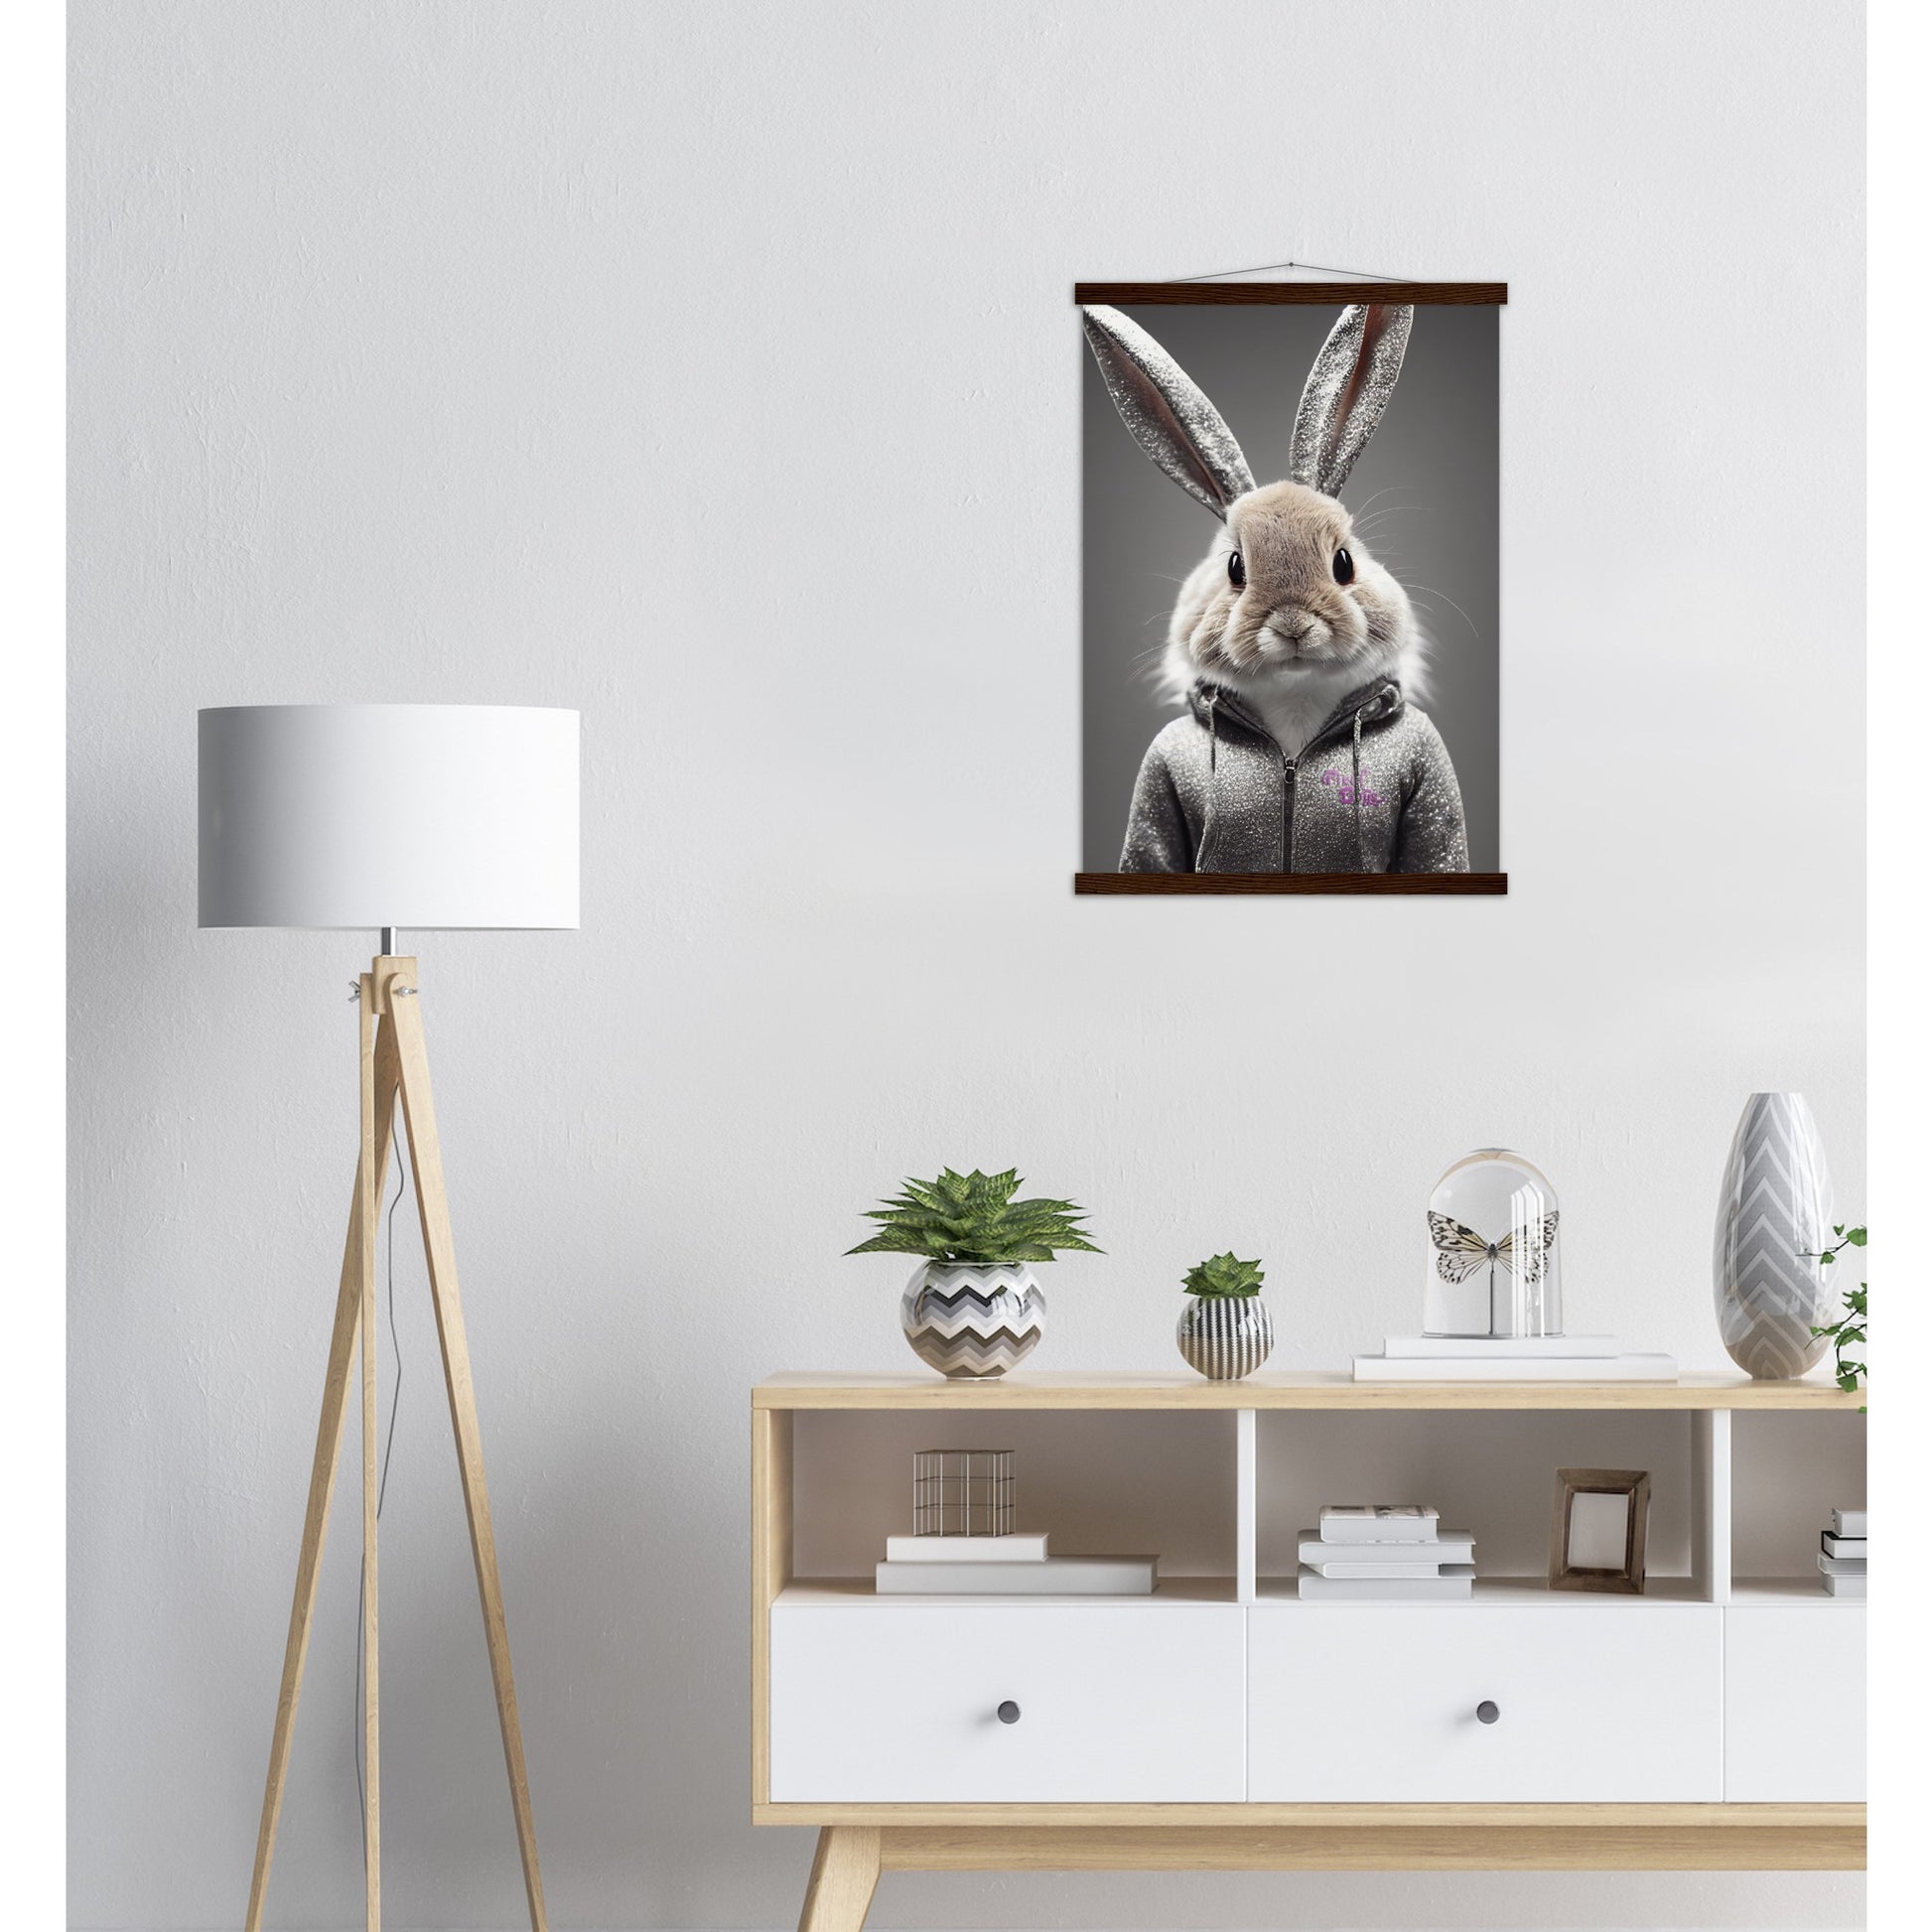 Poster mit Leisten (Holz) - in Museumsqualität - Bunny in grey tracksuit - "Cleo" - Cute - Marke:Pixelboys - Brand - Art Prints - Marke - Wandkunst - Papierstärke: 250g/qm - Wall Art - Bunny crey - Skater Betty - Hasen Gang - Original - Künstler:Pixelboys - Poster with frame - Office Poster - Trend - Wandschmuck - Atelier USA - 